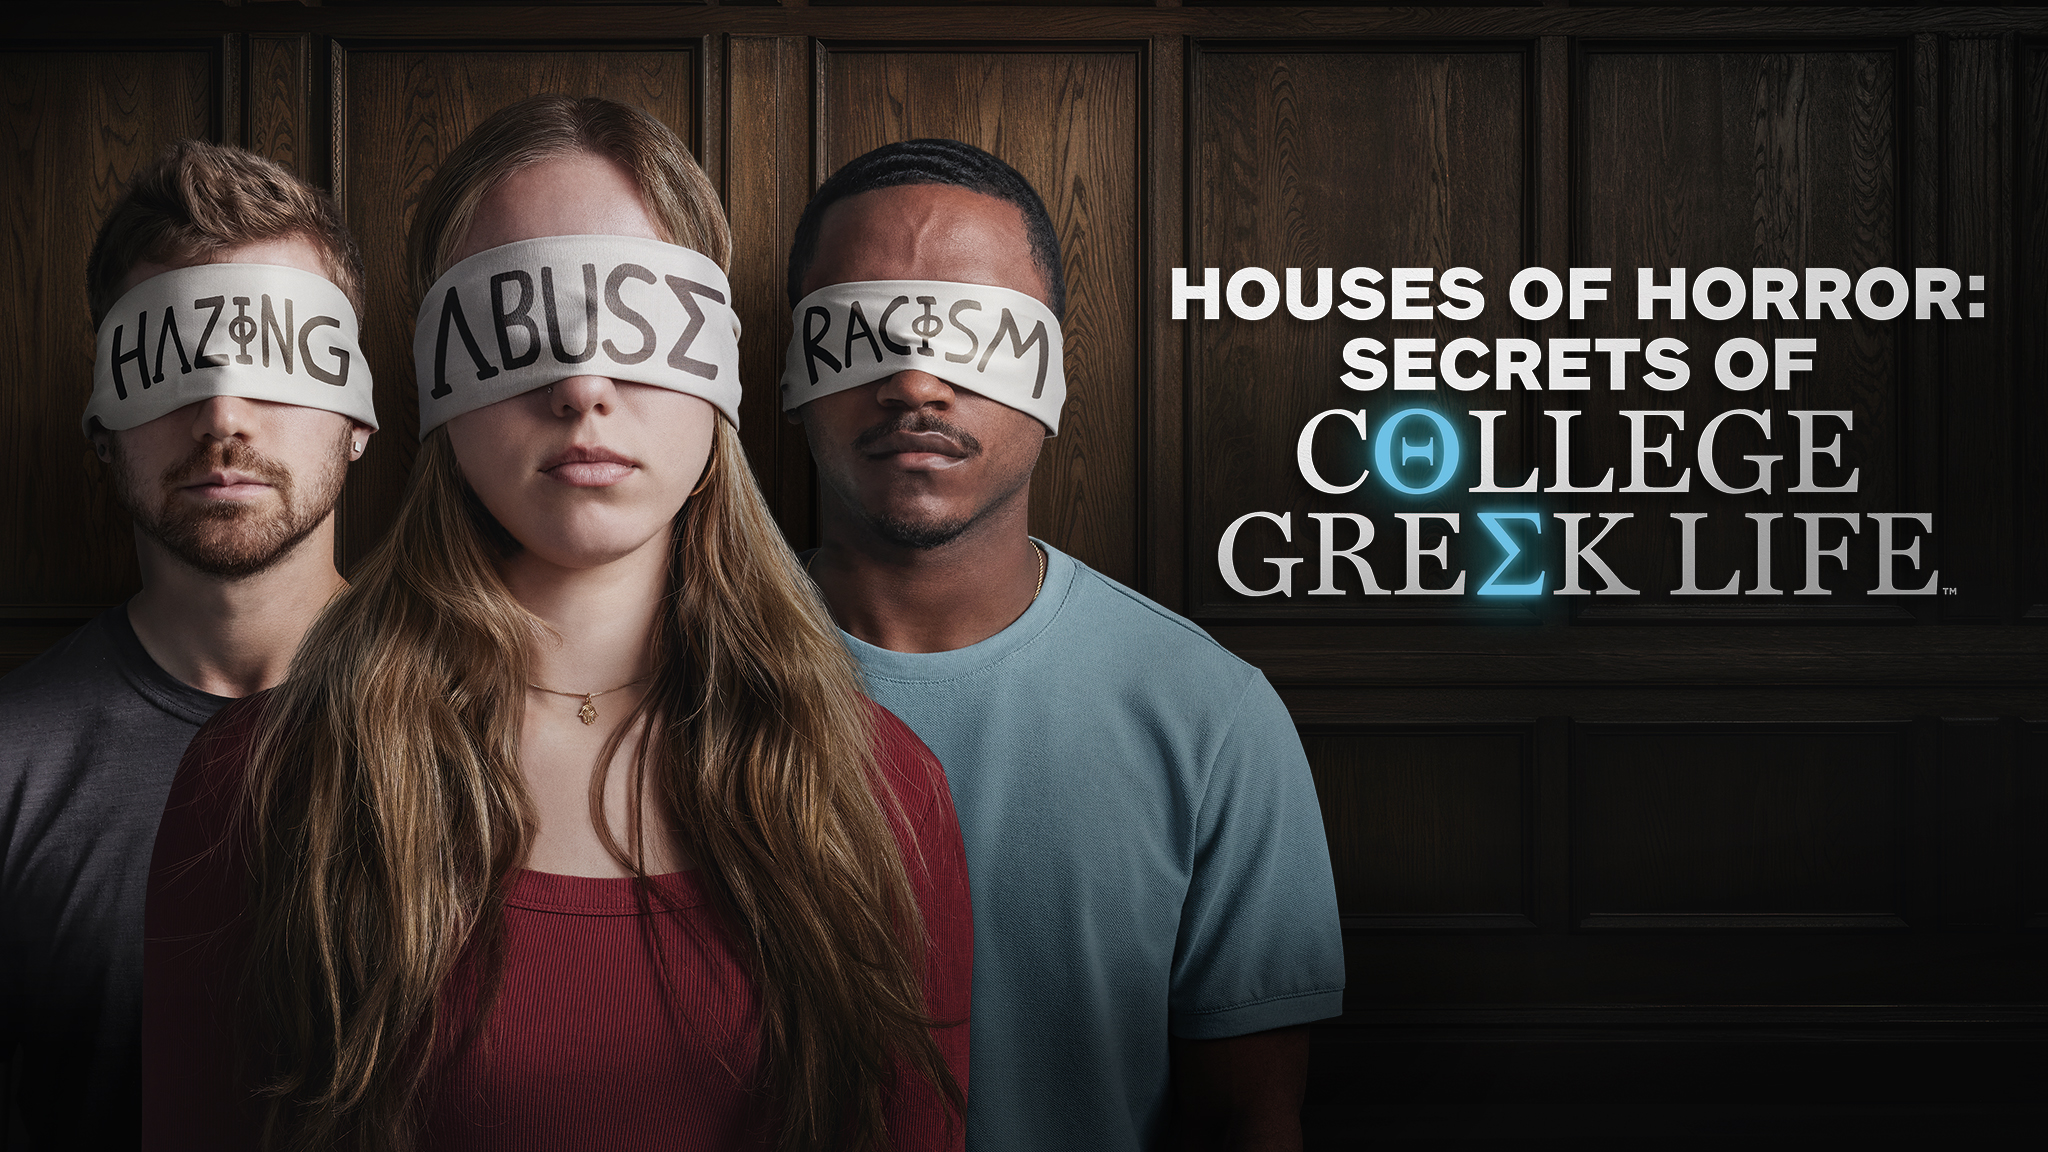 Houses of Horror: Secrets of College Greek Life